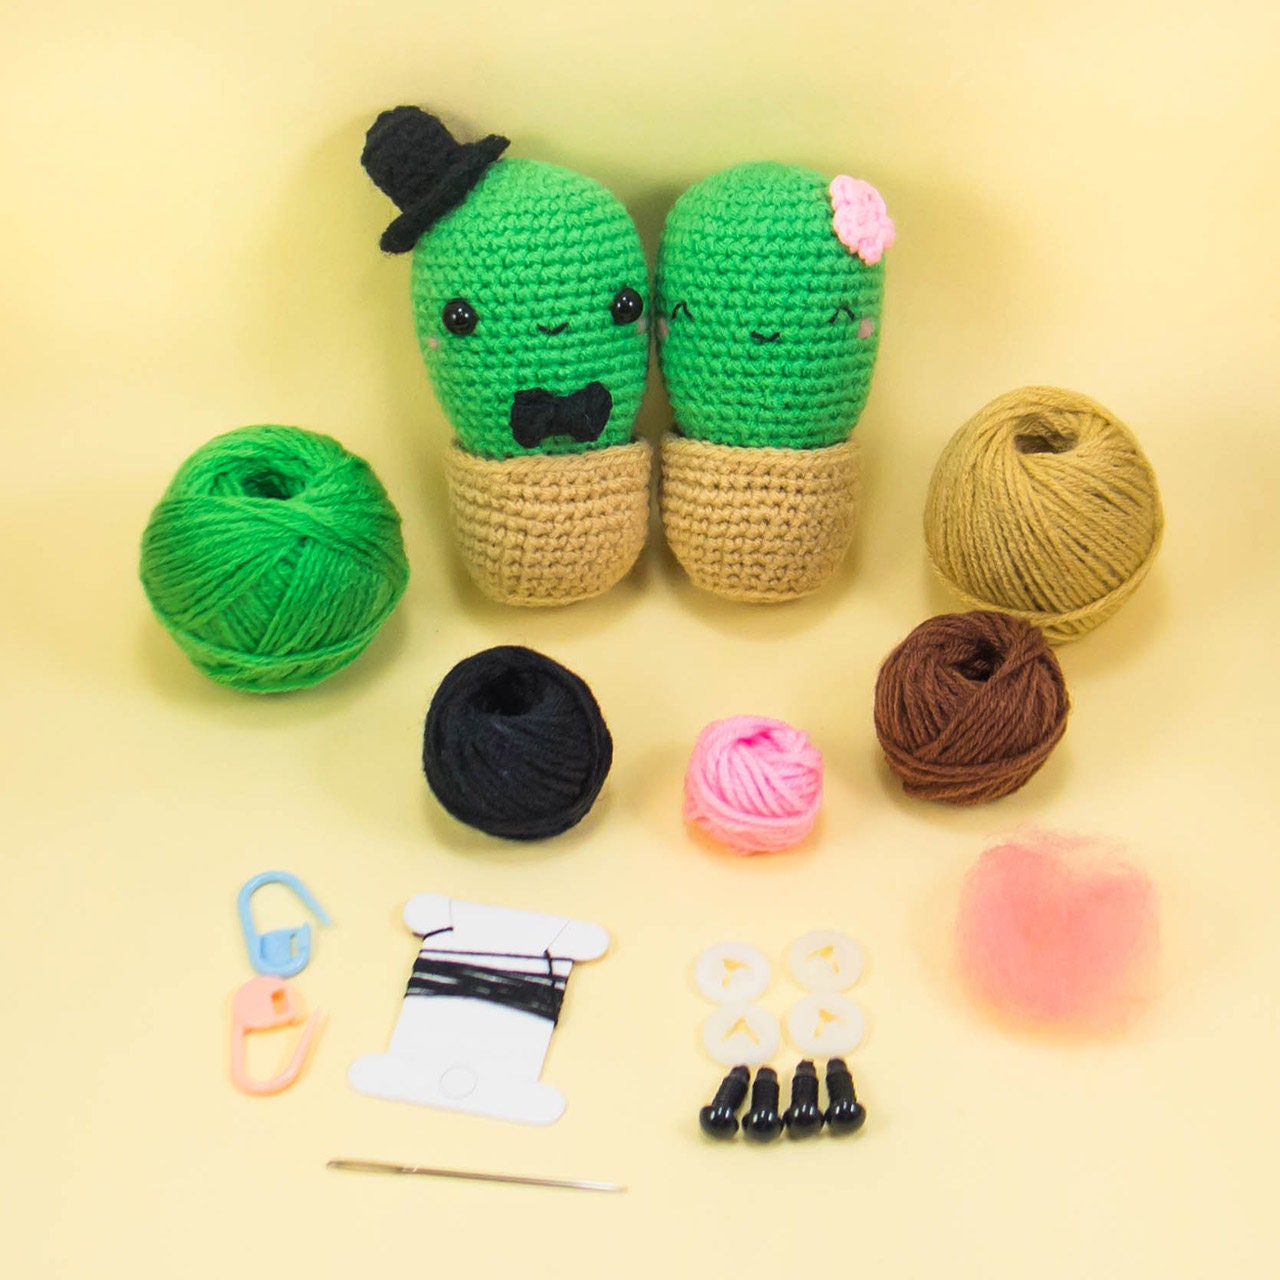 Cat Crochet Kit Cat Amigurumi Kit Cat Couple DIY Kit Kitty Stuffed